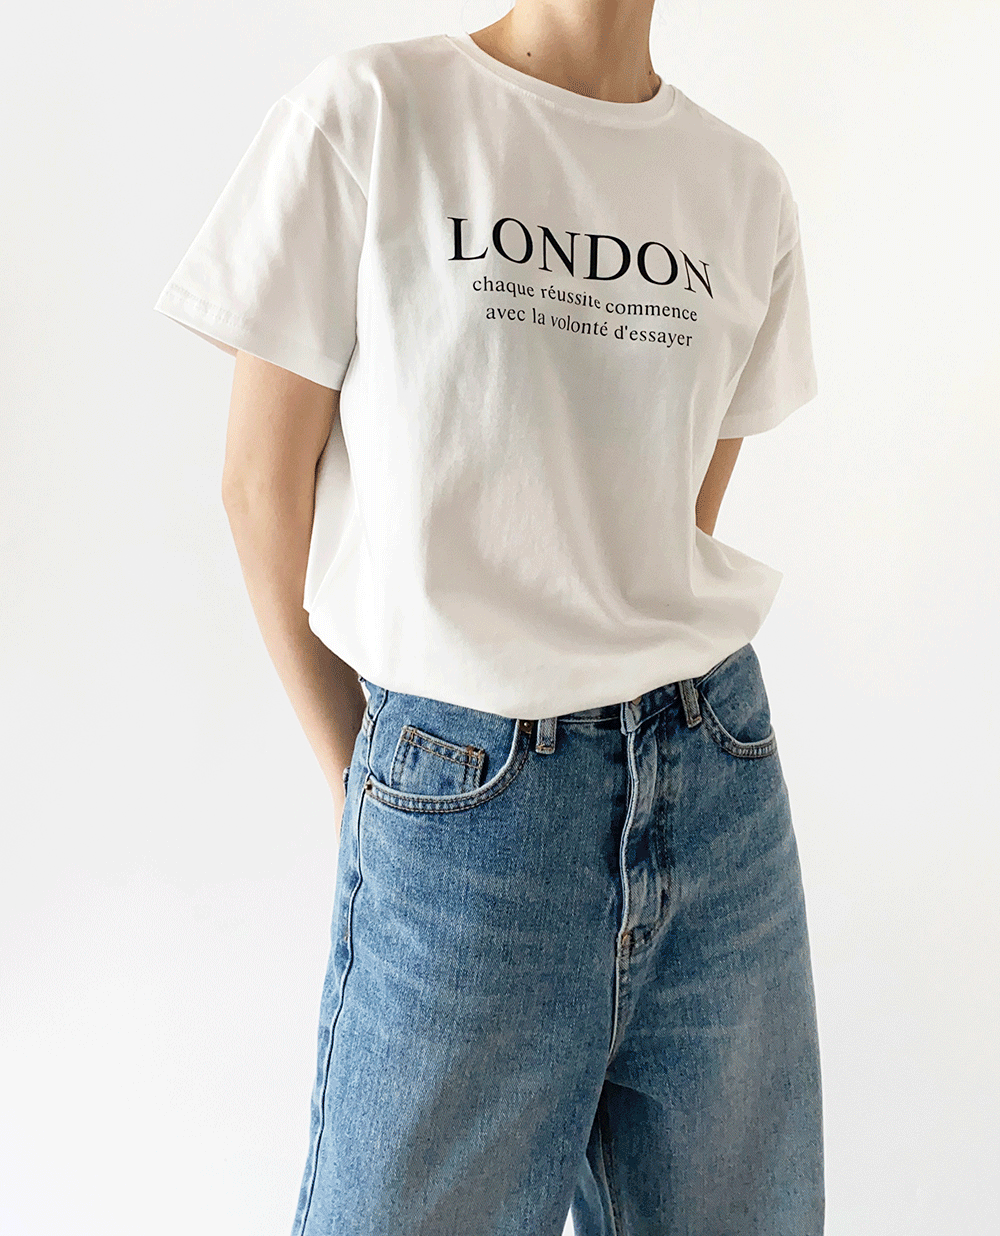 London half t-shirt